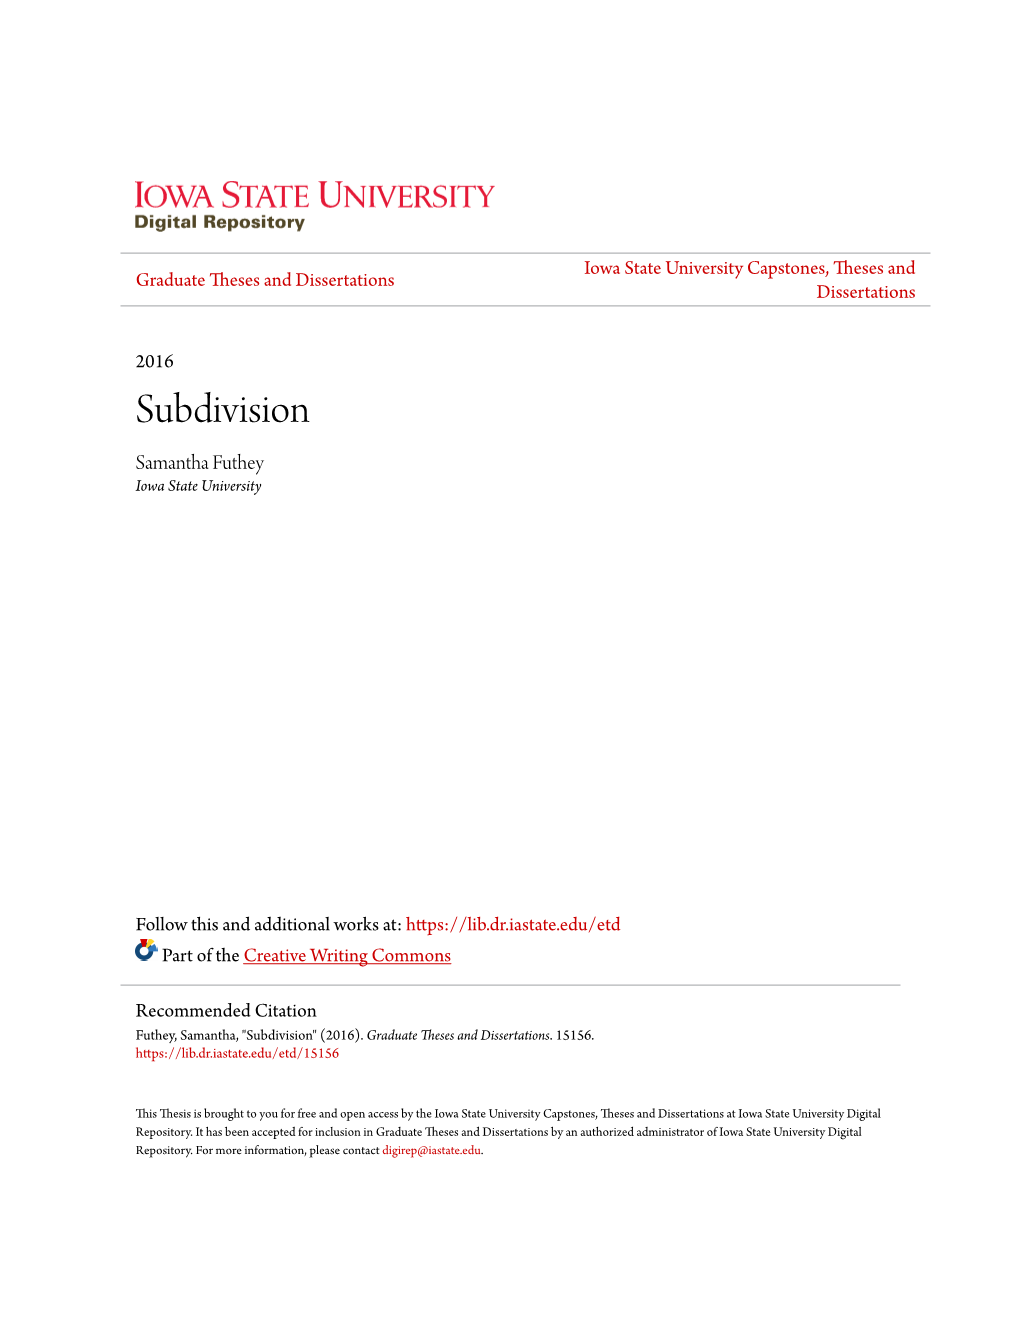 Subdivision Samantha Futhey Iowa State University